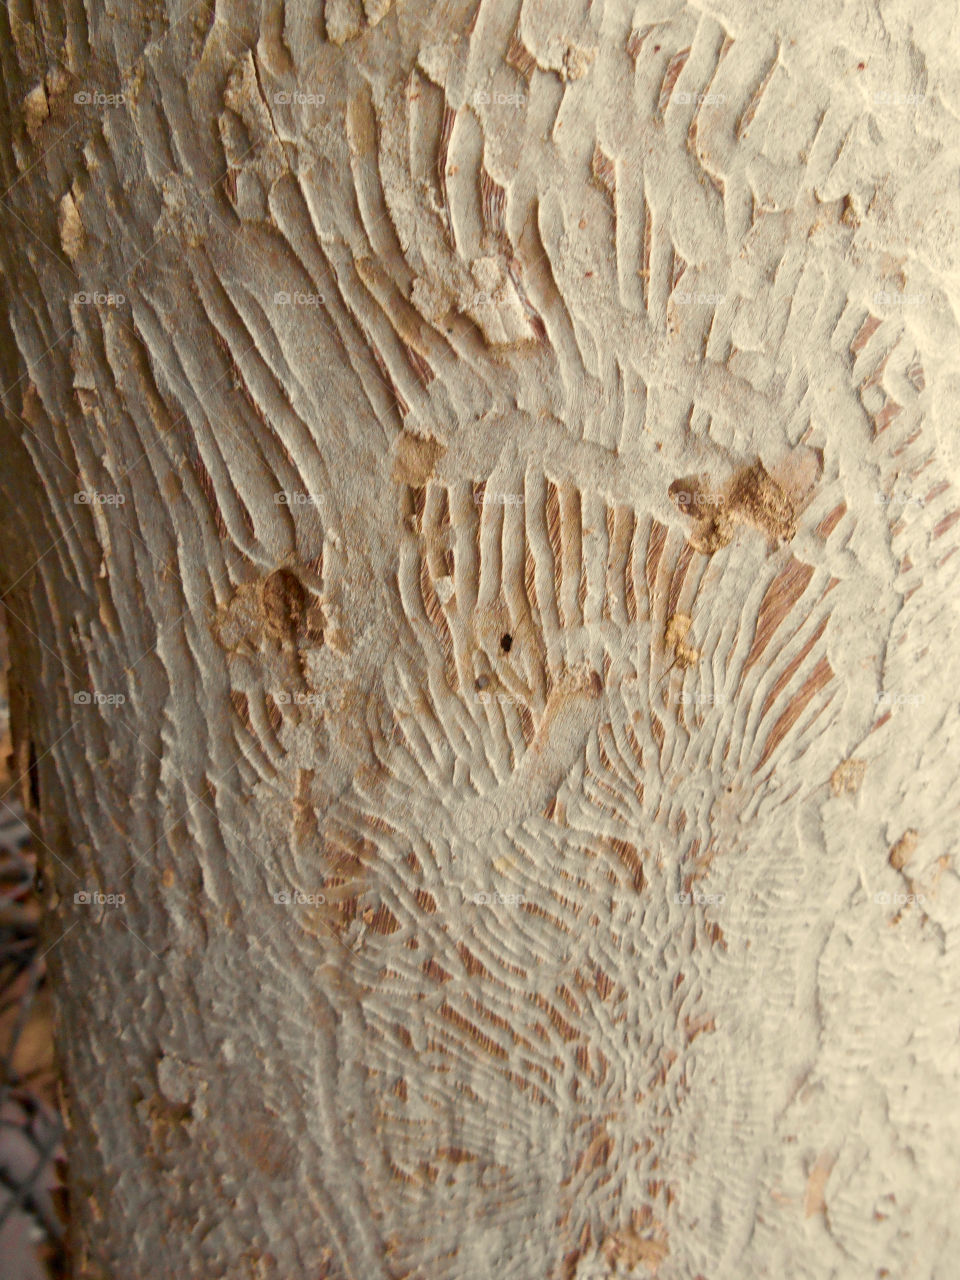 Termite patterns